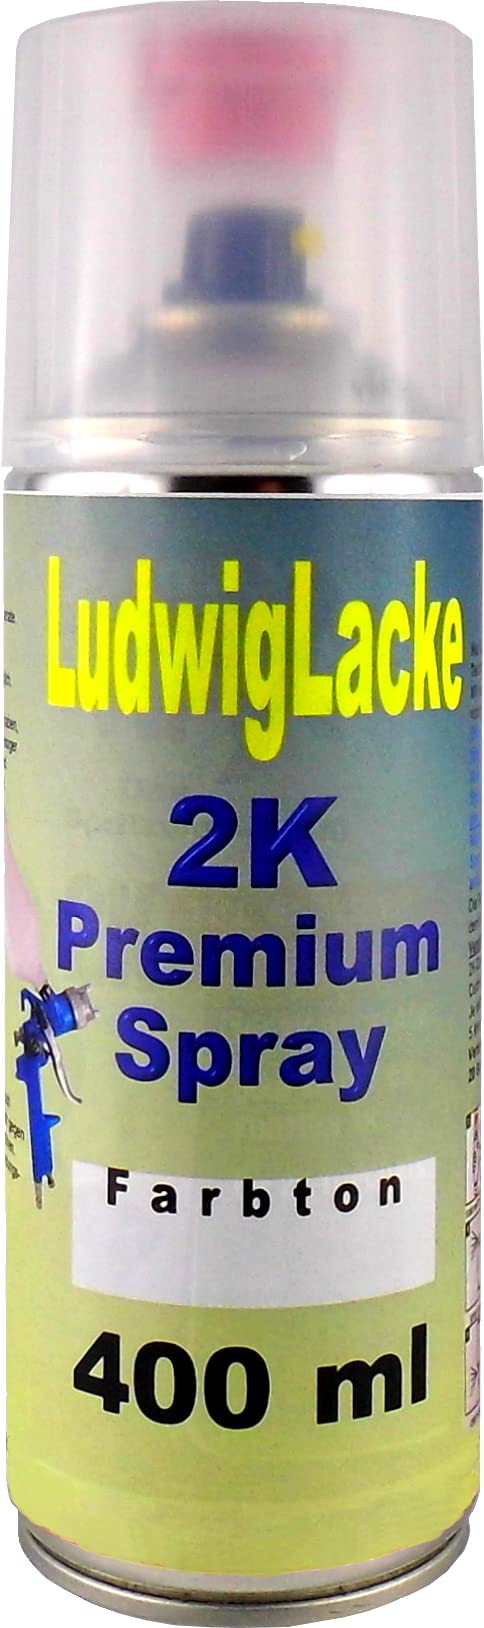 Ludwig Lacke RAL 5010 ENZIANBLAU 2K Premium Spray 400ml von Ludwiglacke